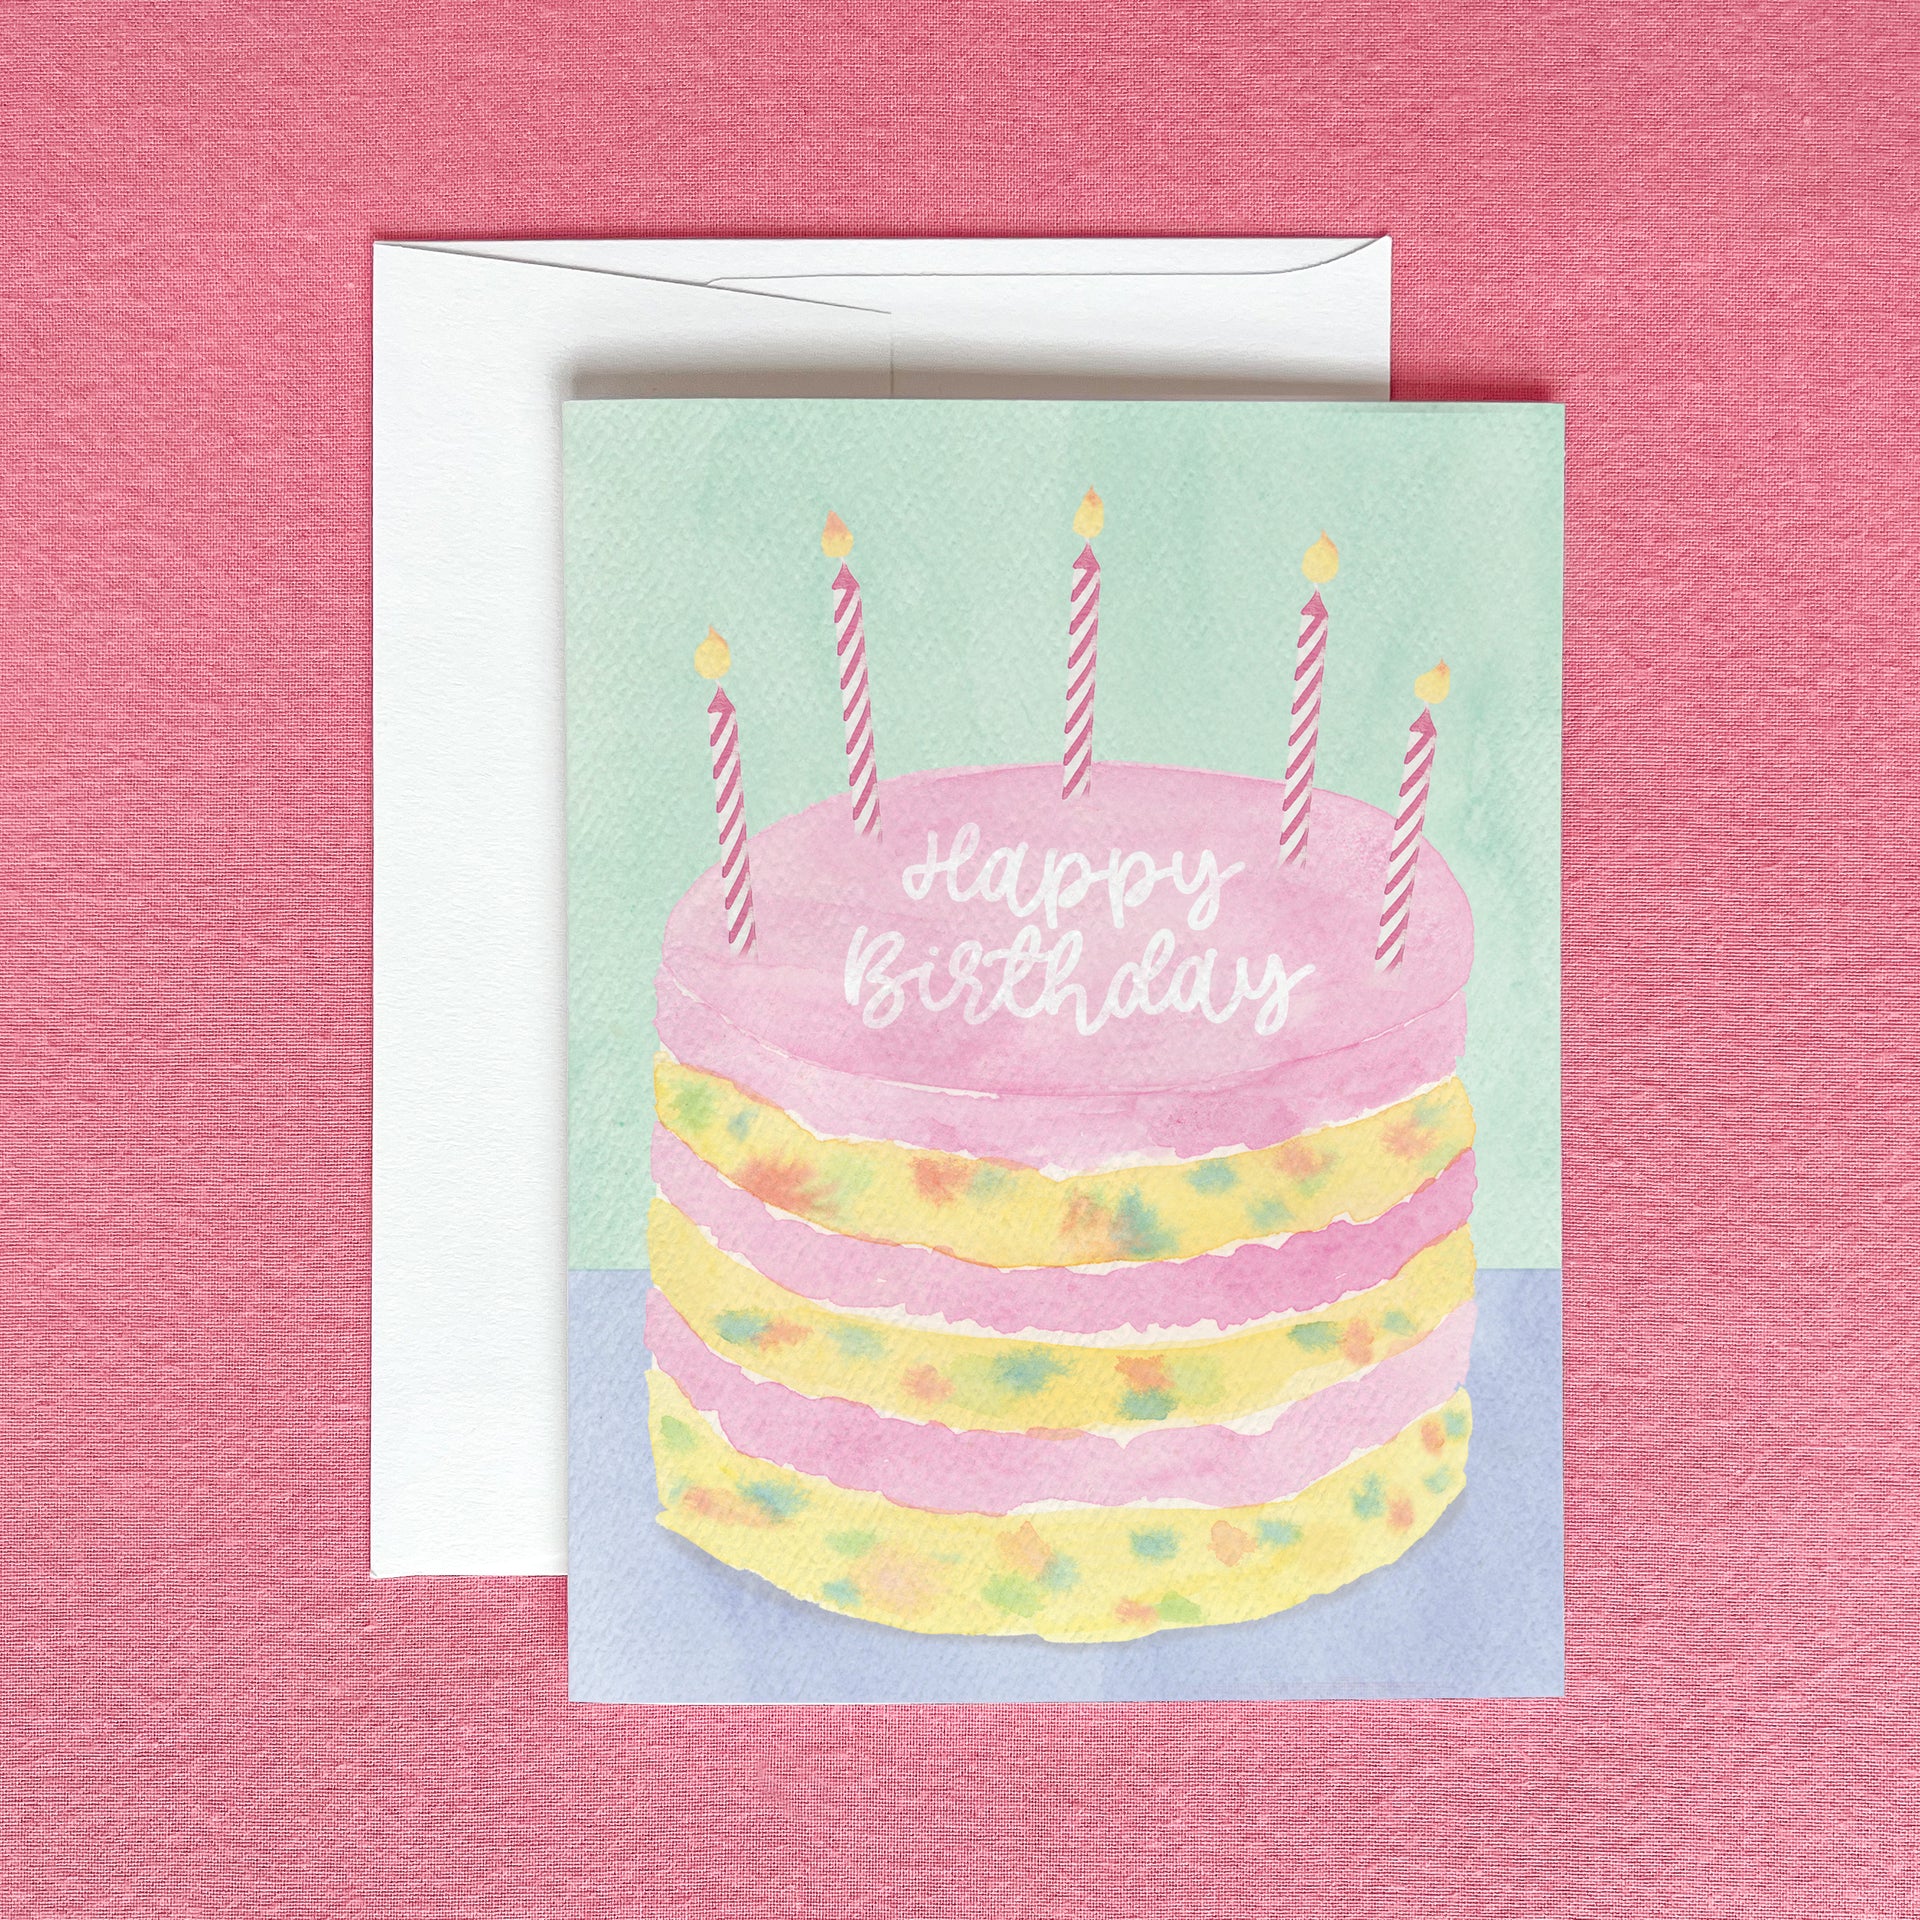 Funfetti Birthday Cake Greeting Card by Gert & Co